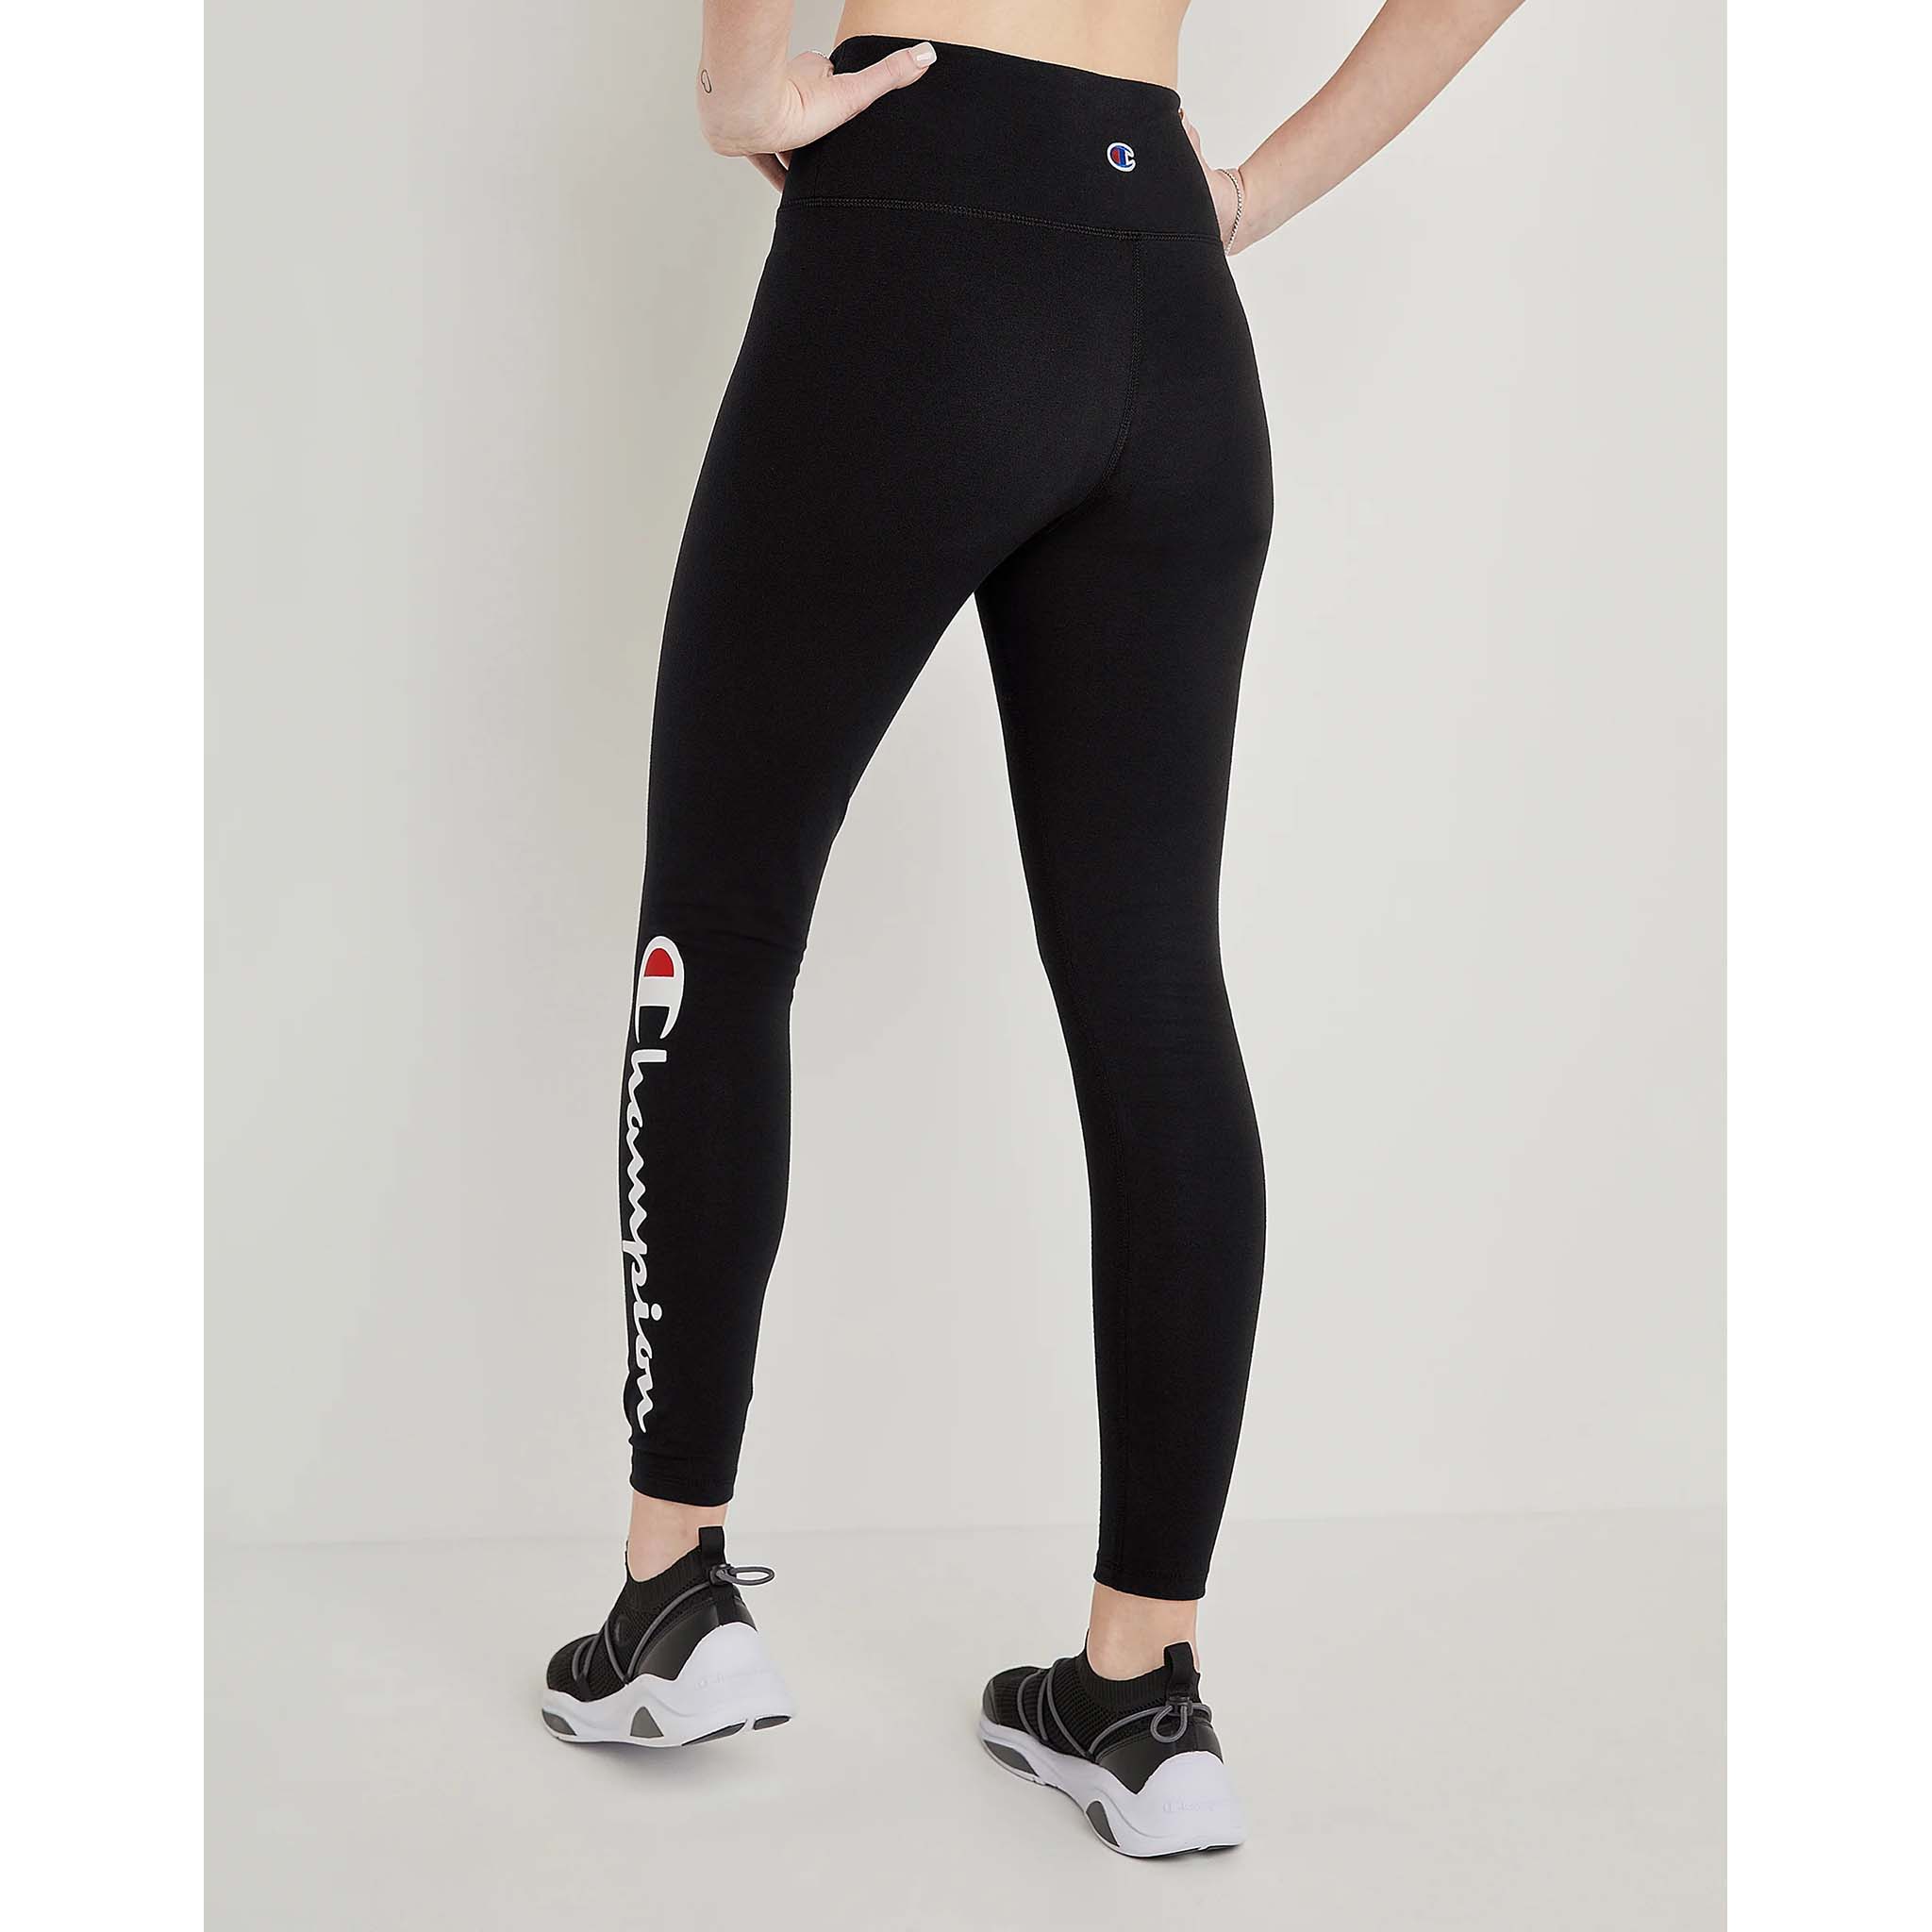 Champion Authentic 7/8 Graphic leggings for women – Soccer Sport Fitness